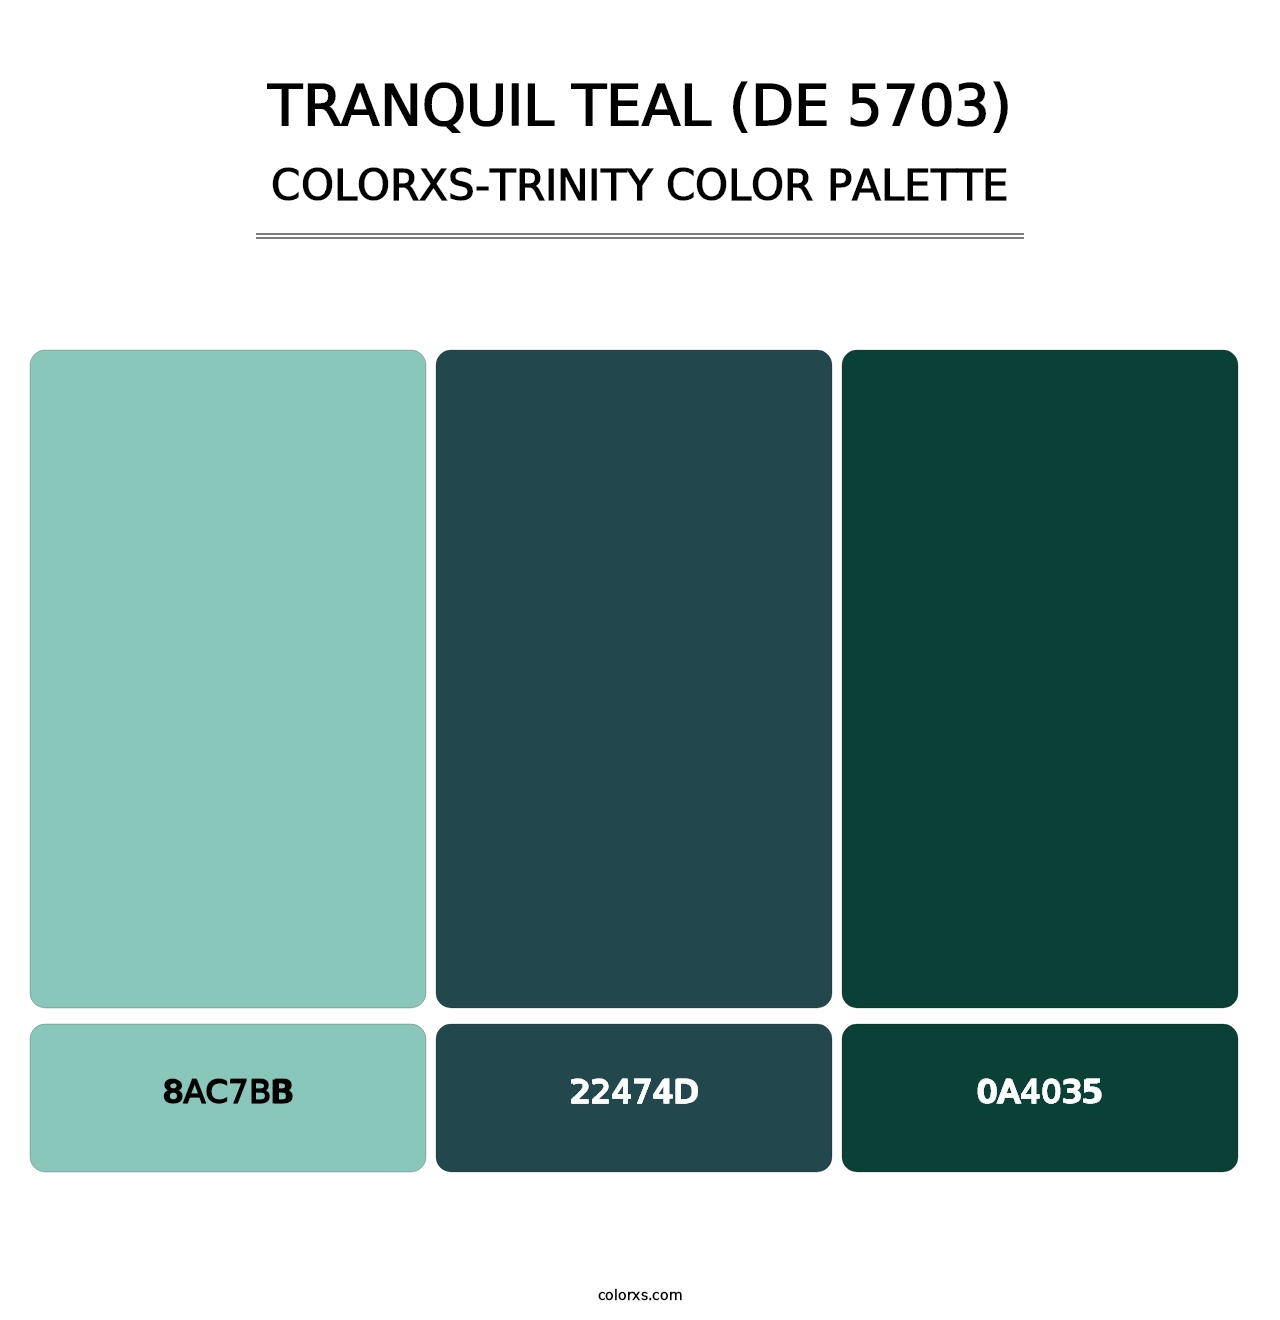 Tranquil Teal (DE 5703) - Colorxs Trinity Palette